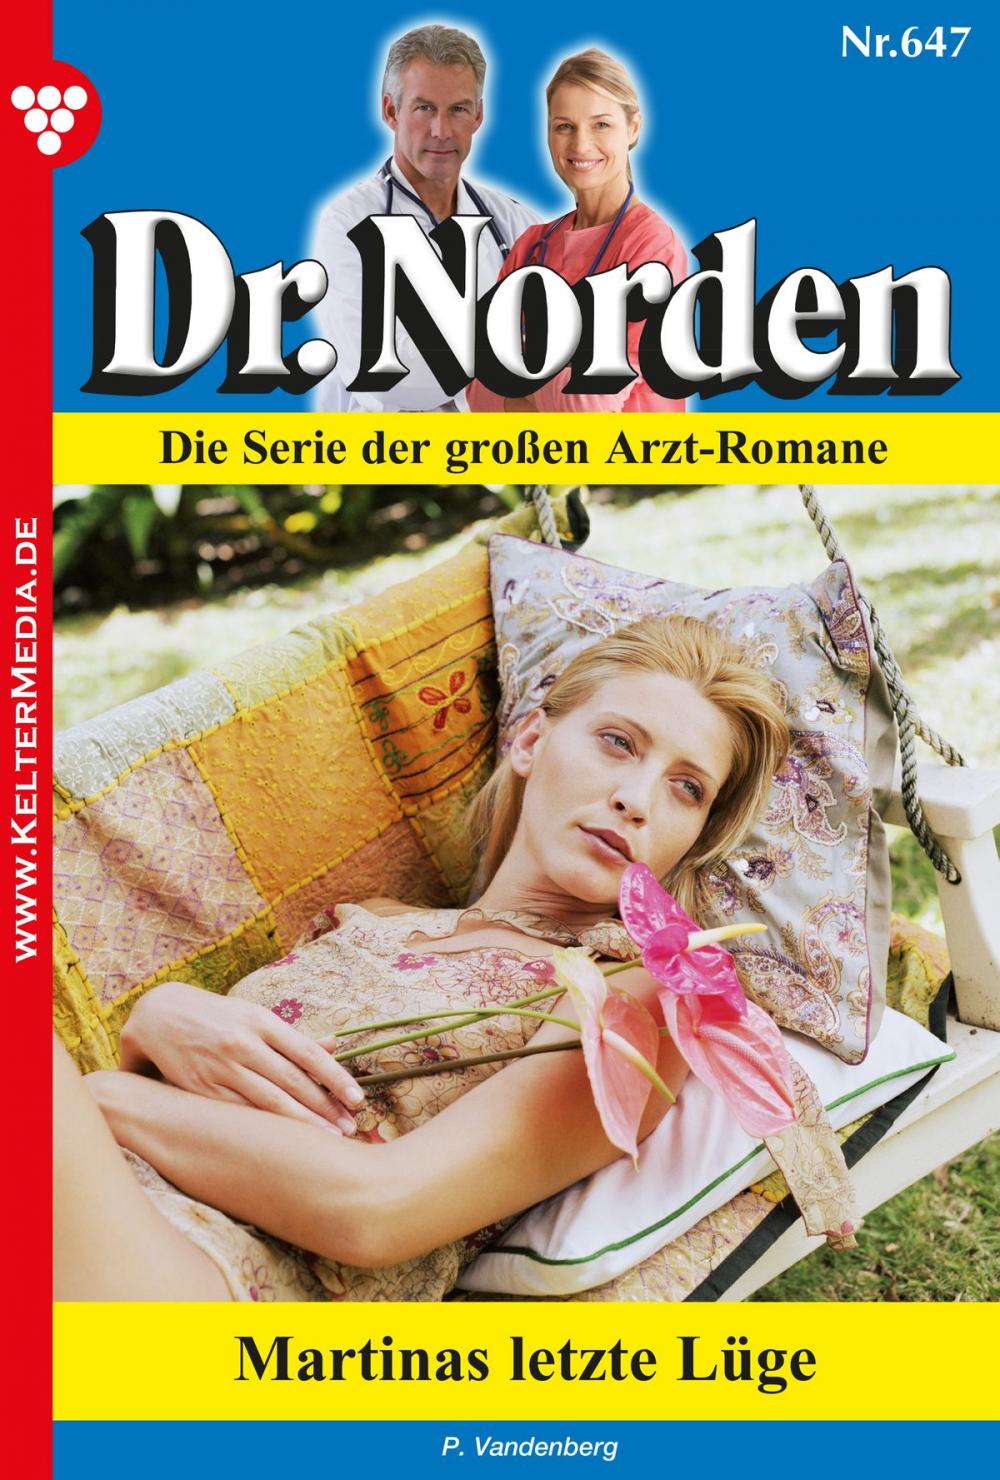 Big bigCover of Dr. Norden 647 – Arztroman